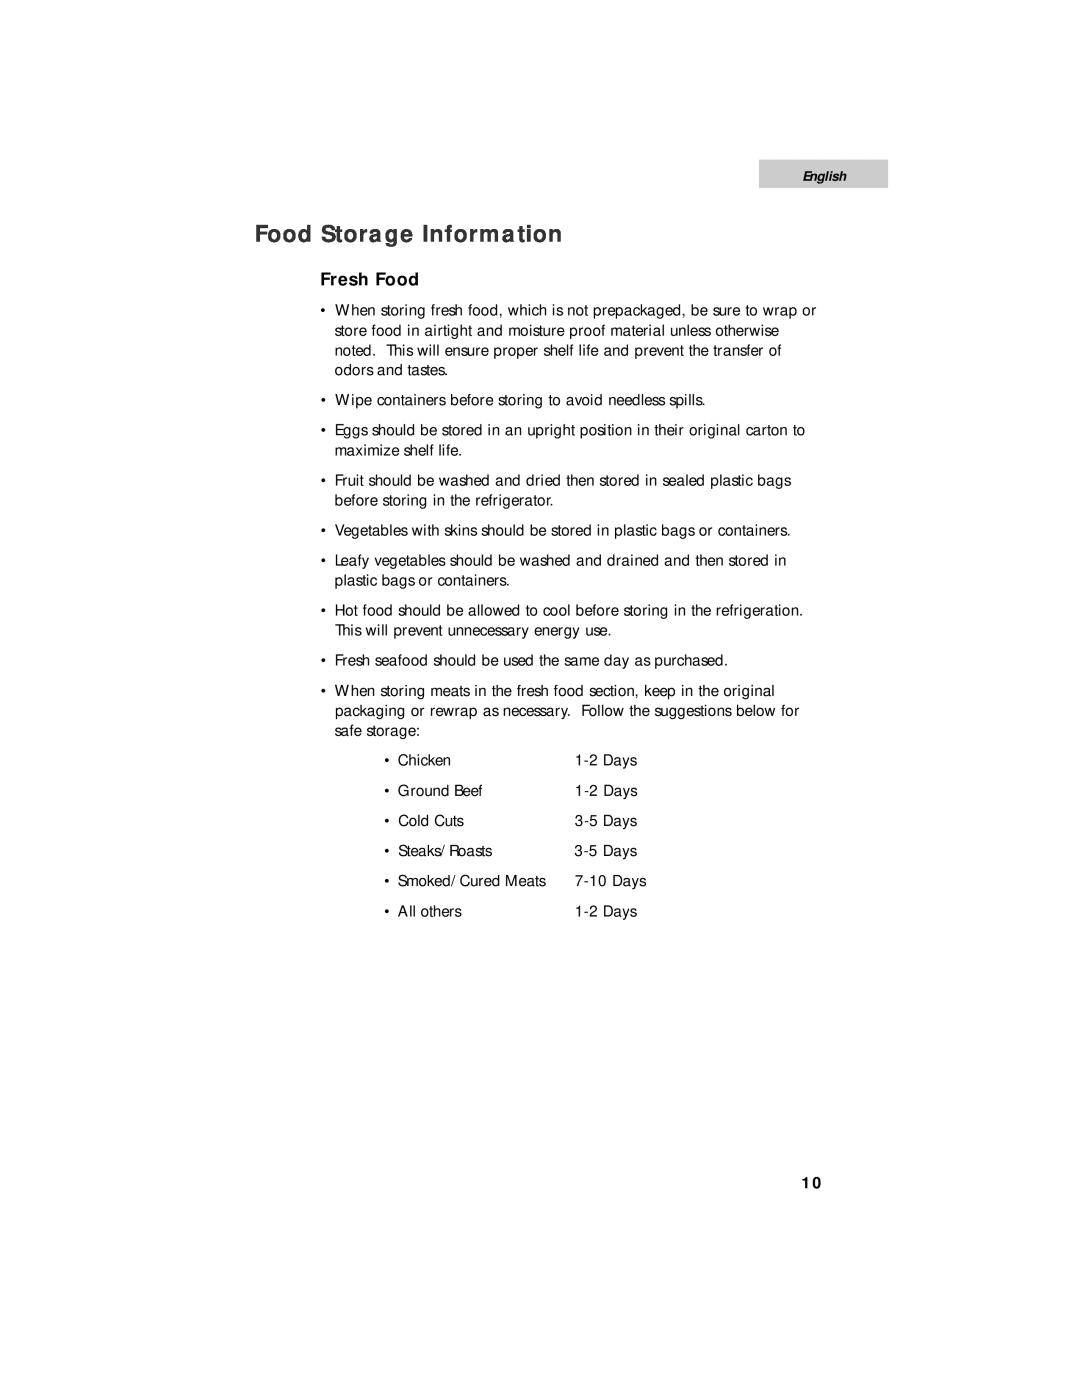 Haier HSE01WNA user manual Food Storage Information, Fresh Food, English 